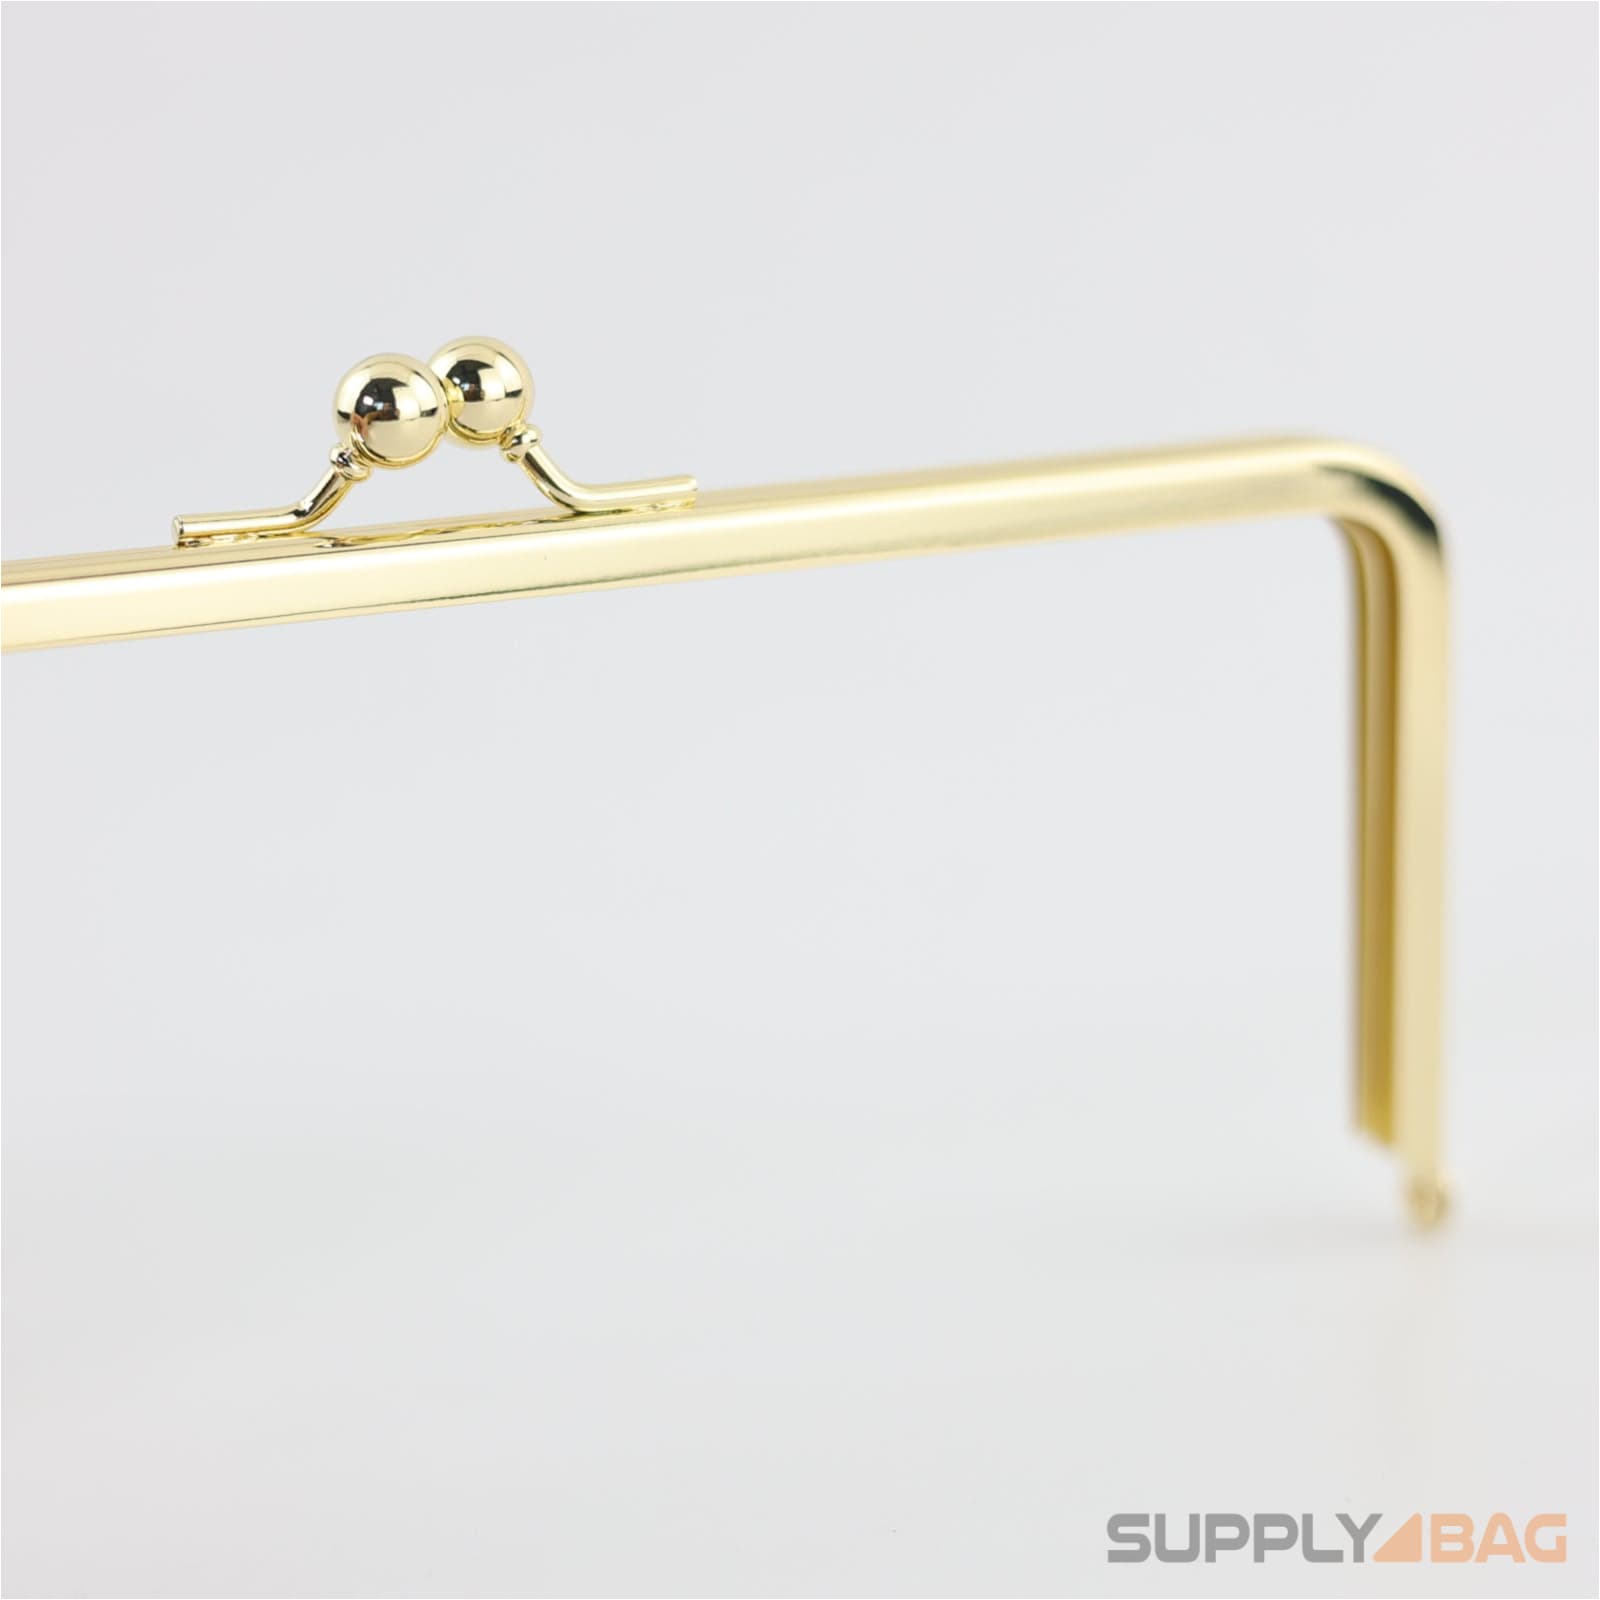 7 3/4 x 3 inch - kisslock clasp - gold metal purse frame